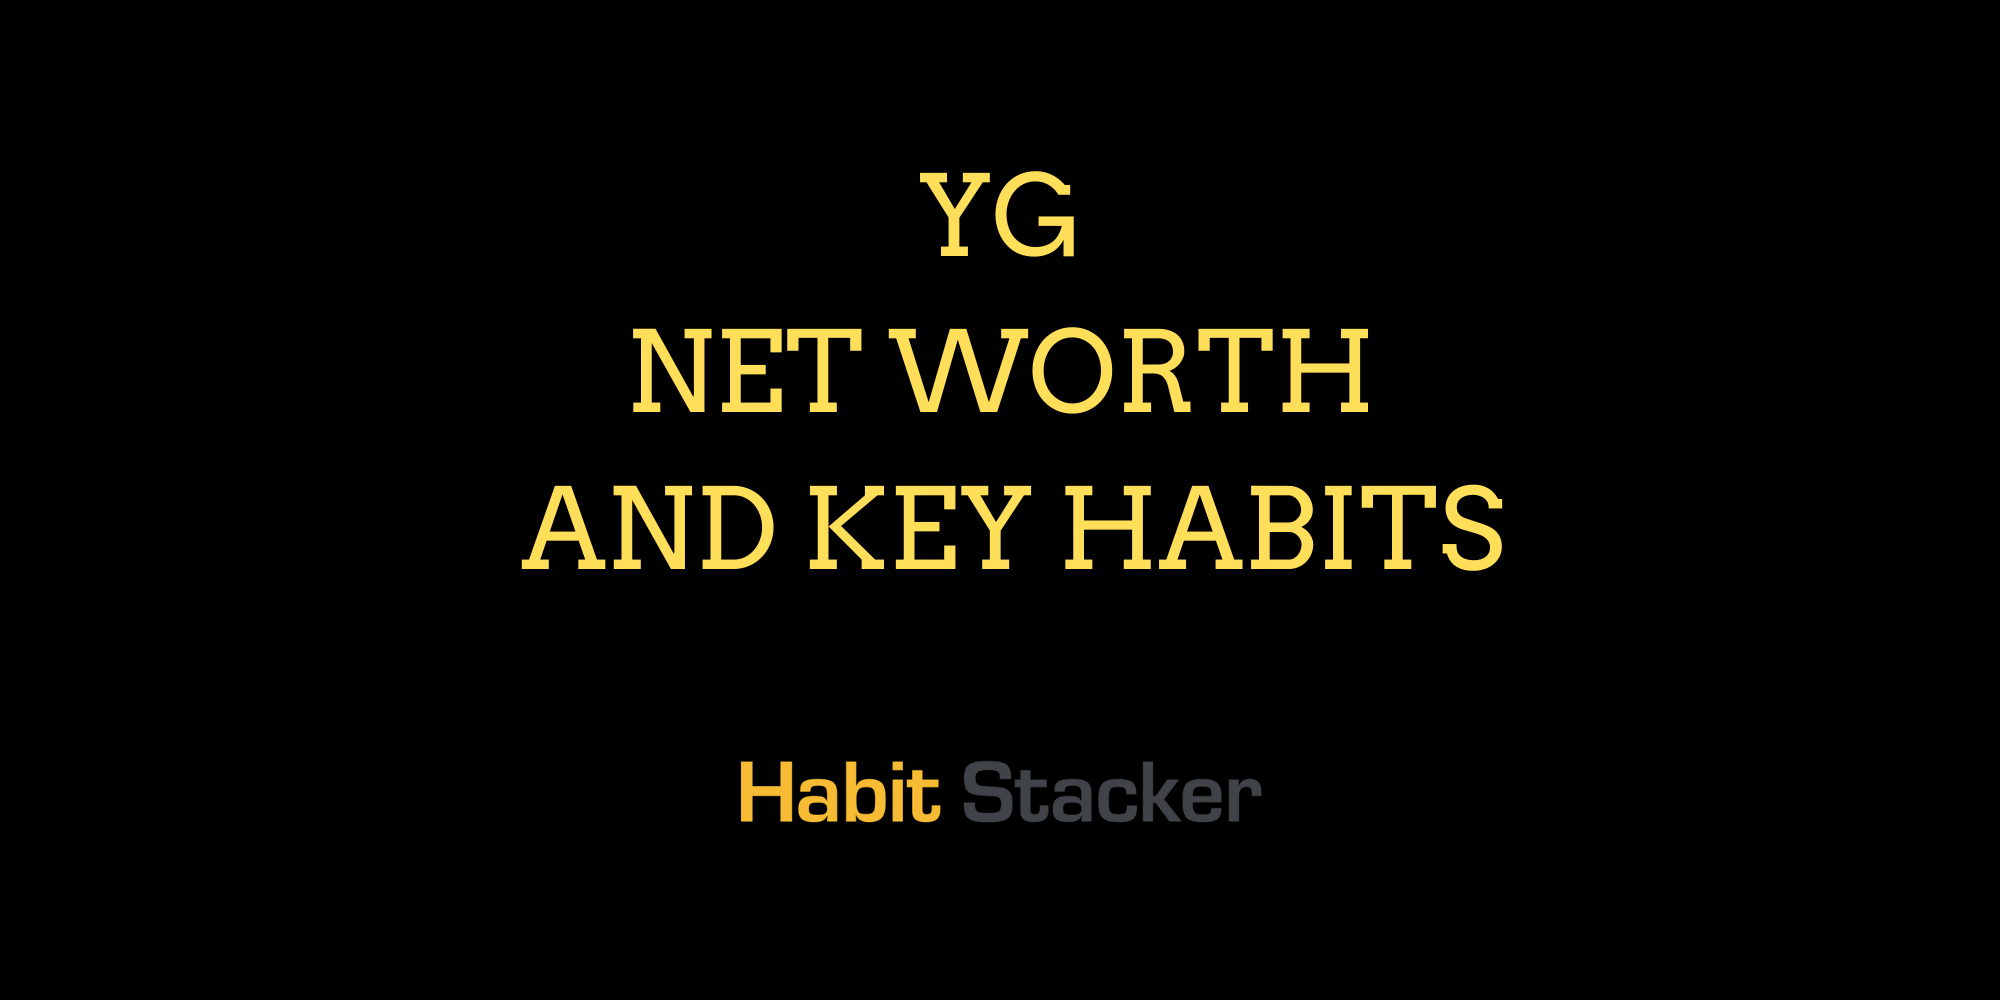 YG Net Worth and Key Habits